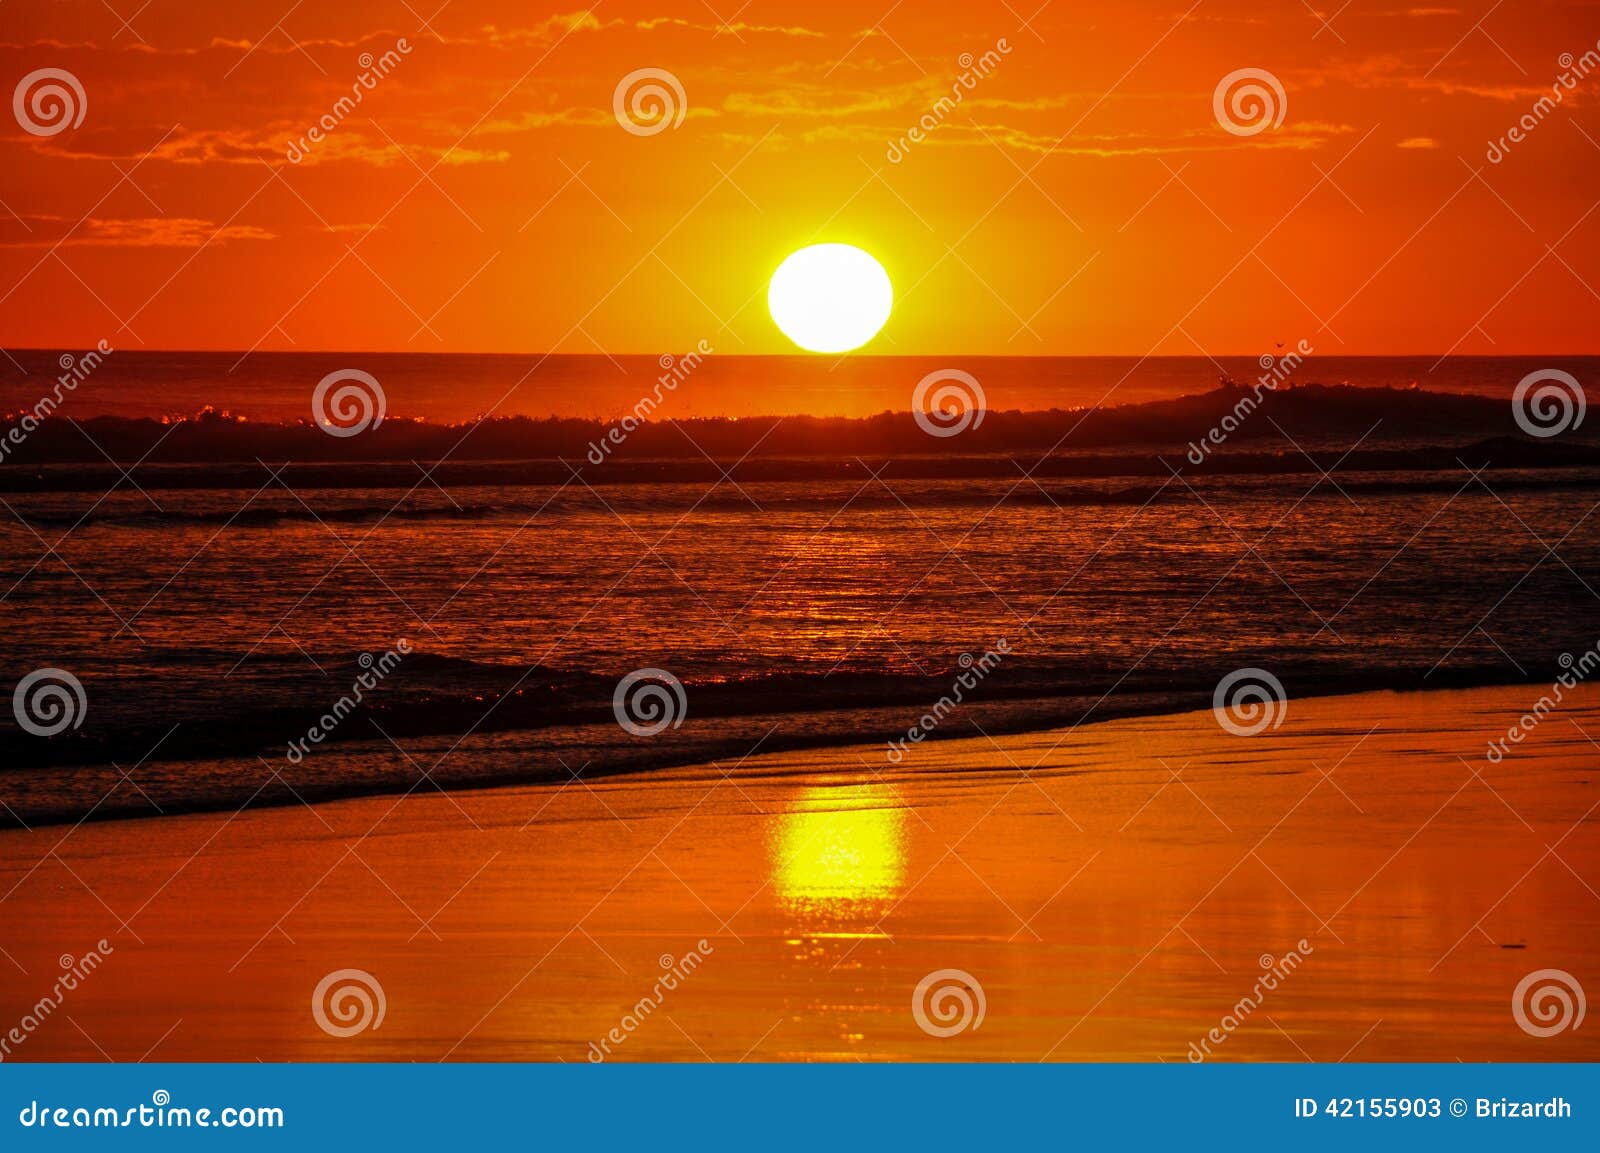 beautiful sunsets of playa el cuco, el salvador